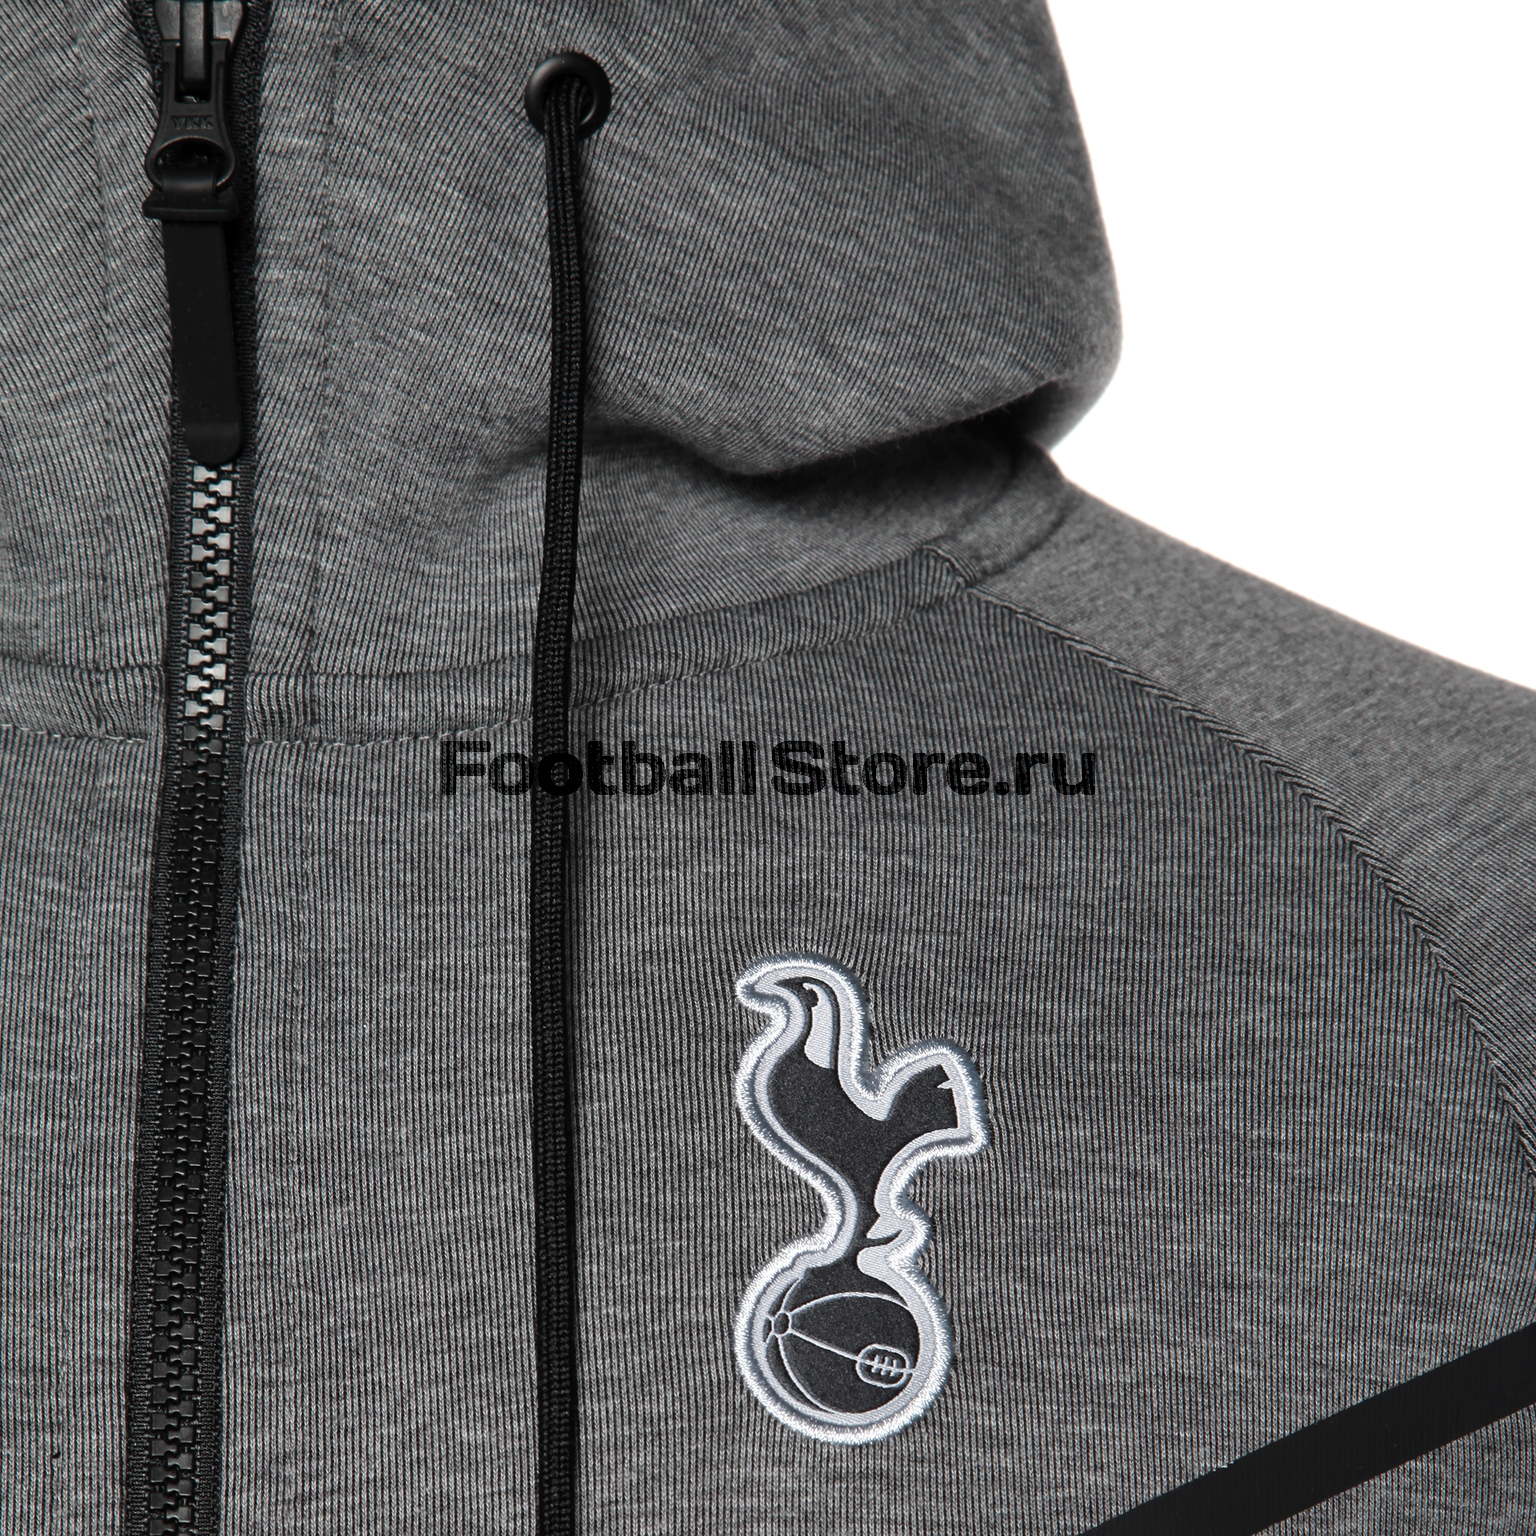 Куртка Nike Tottenham Hotspur Fleece AA1931-095